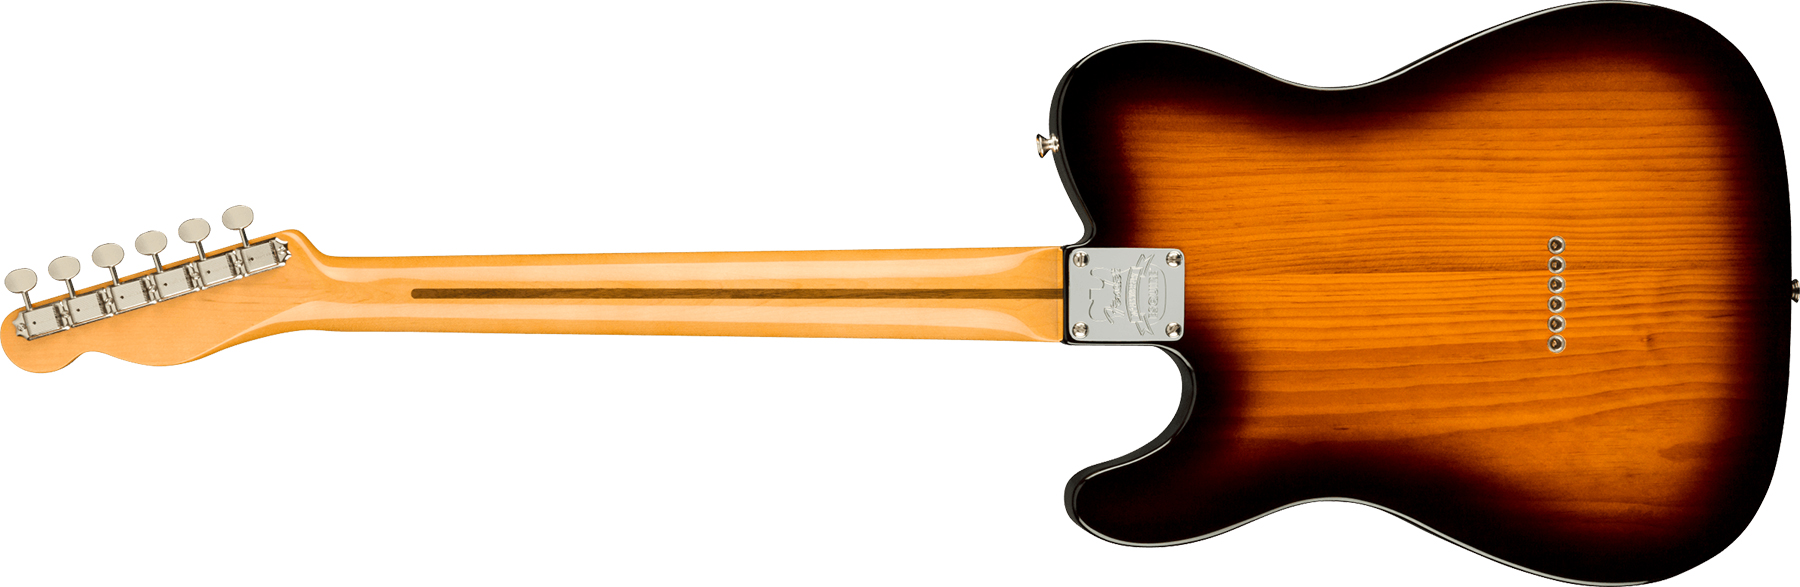 Fender Esquire/tele 70th Anniversary Usa Mn - 2-color Sunburst - Tel shape electric guitar - Variation 1